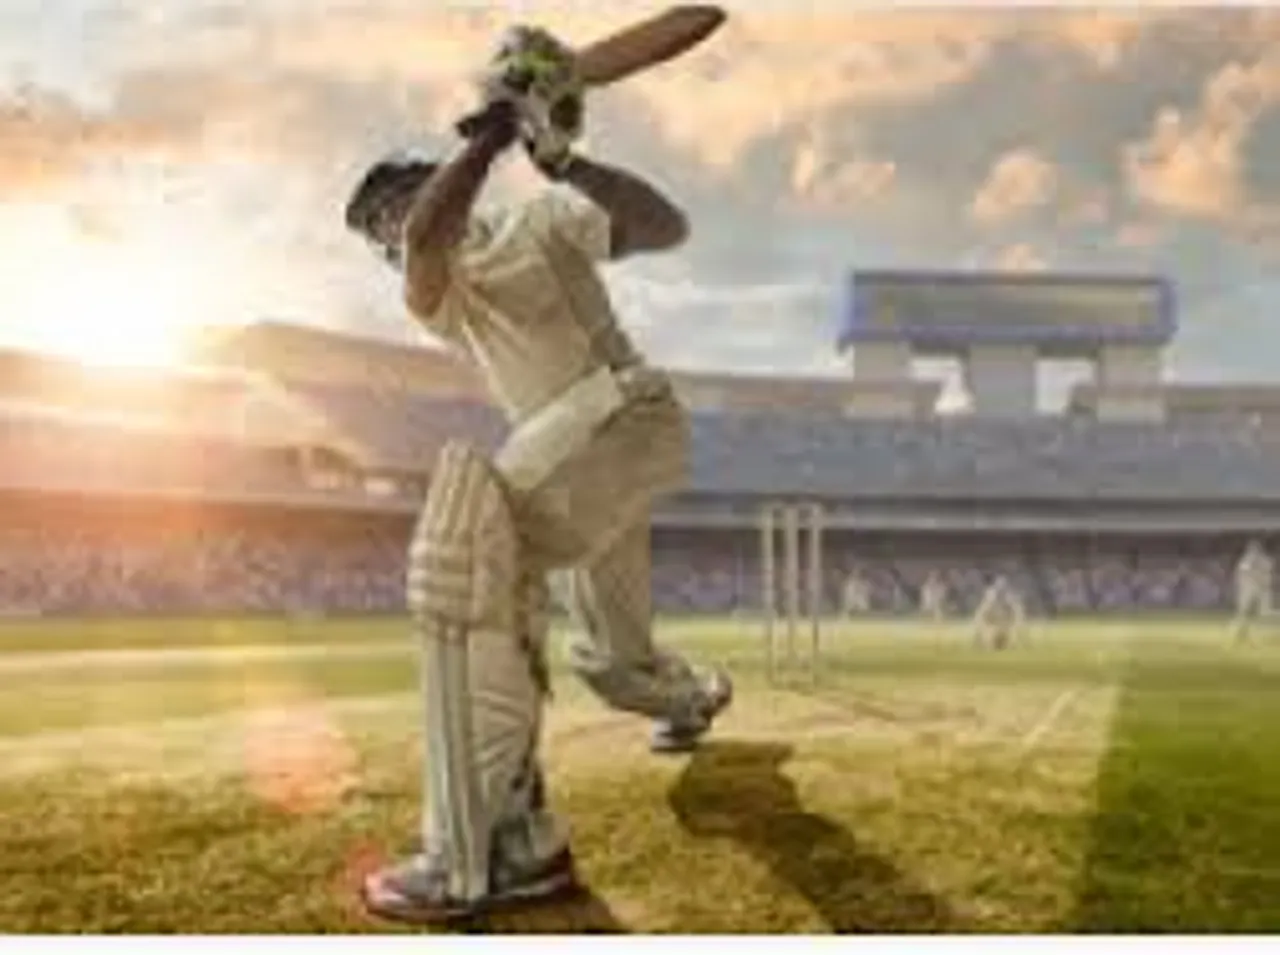 Qlik’s new app will please cricket fans with visual analytics